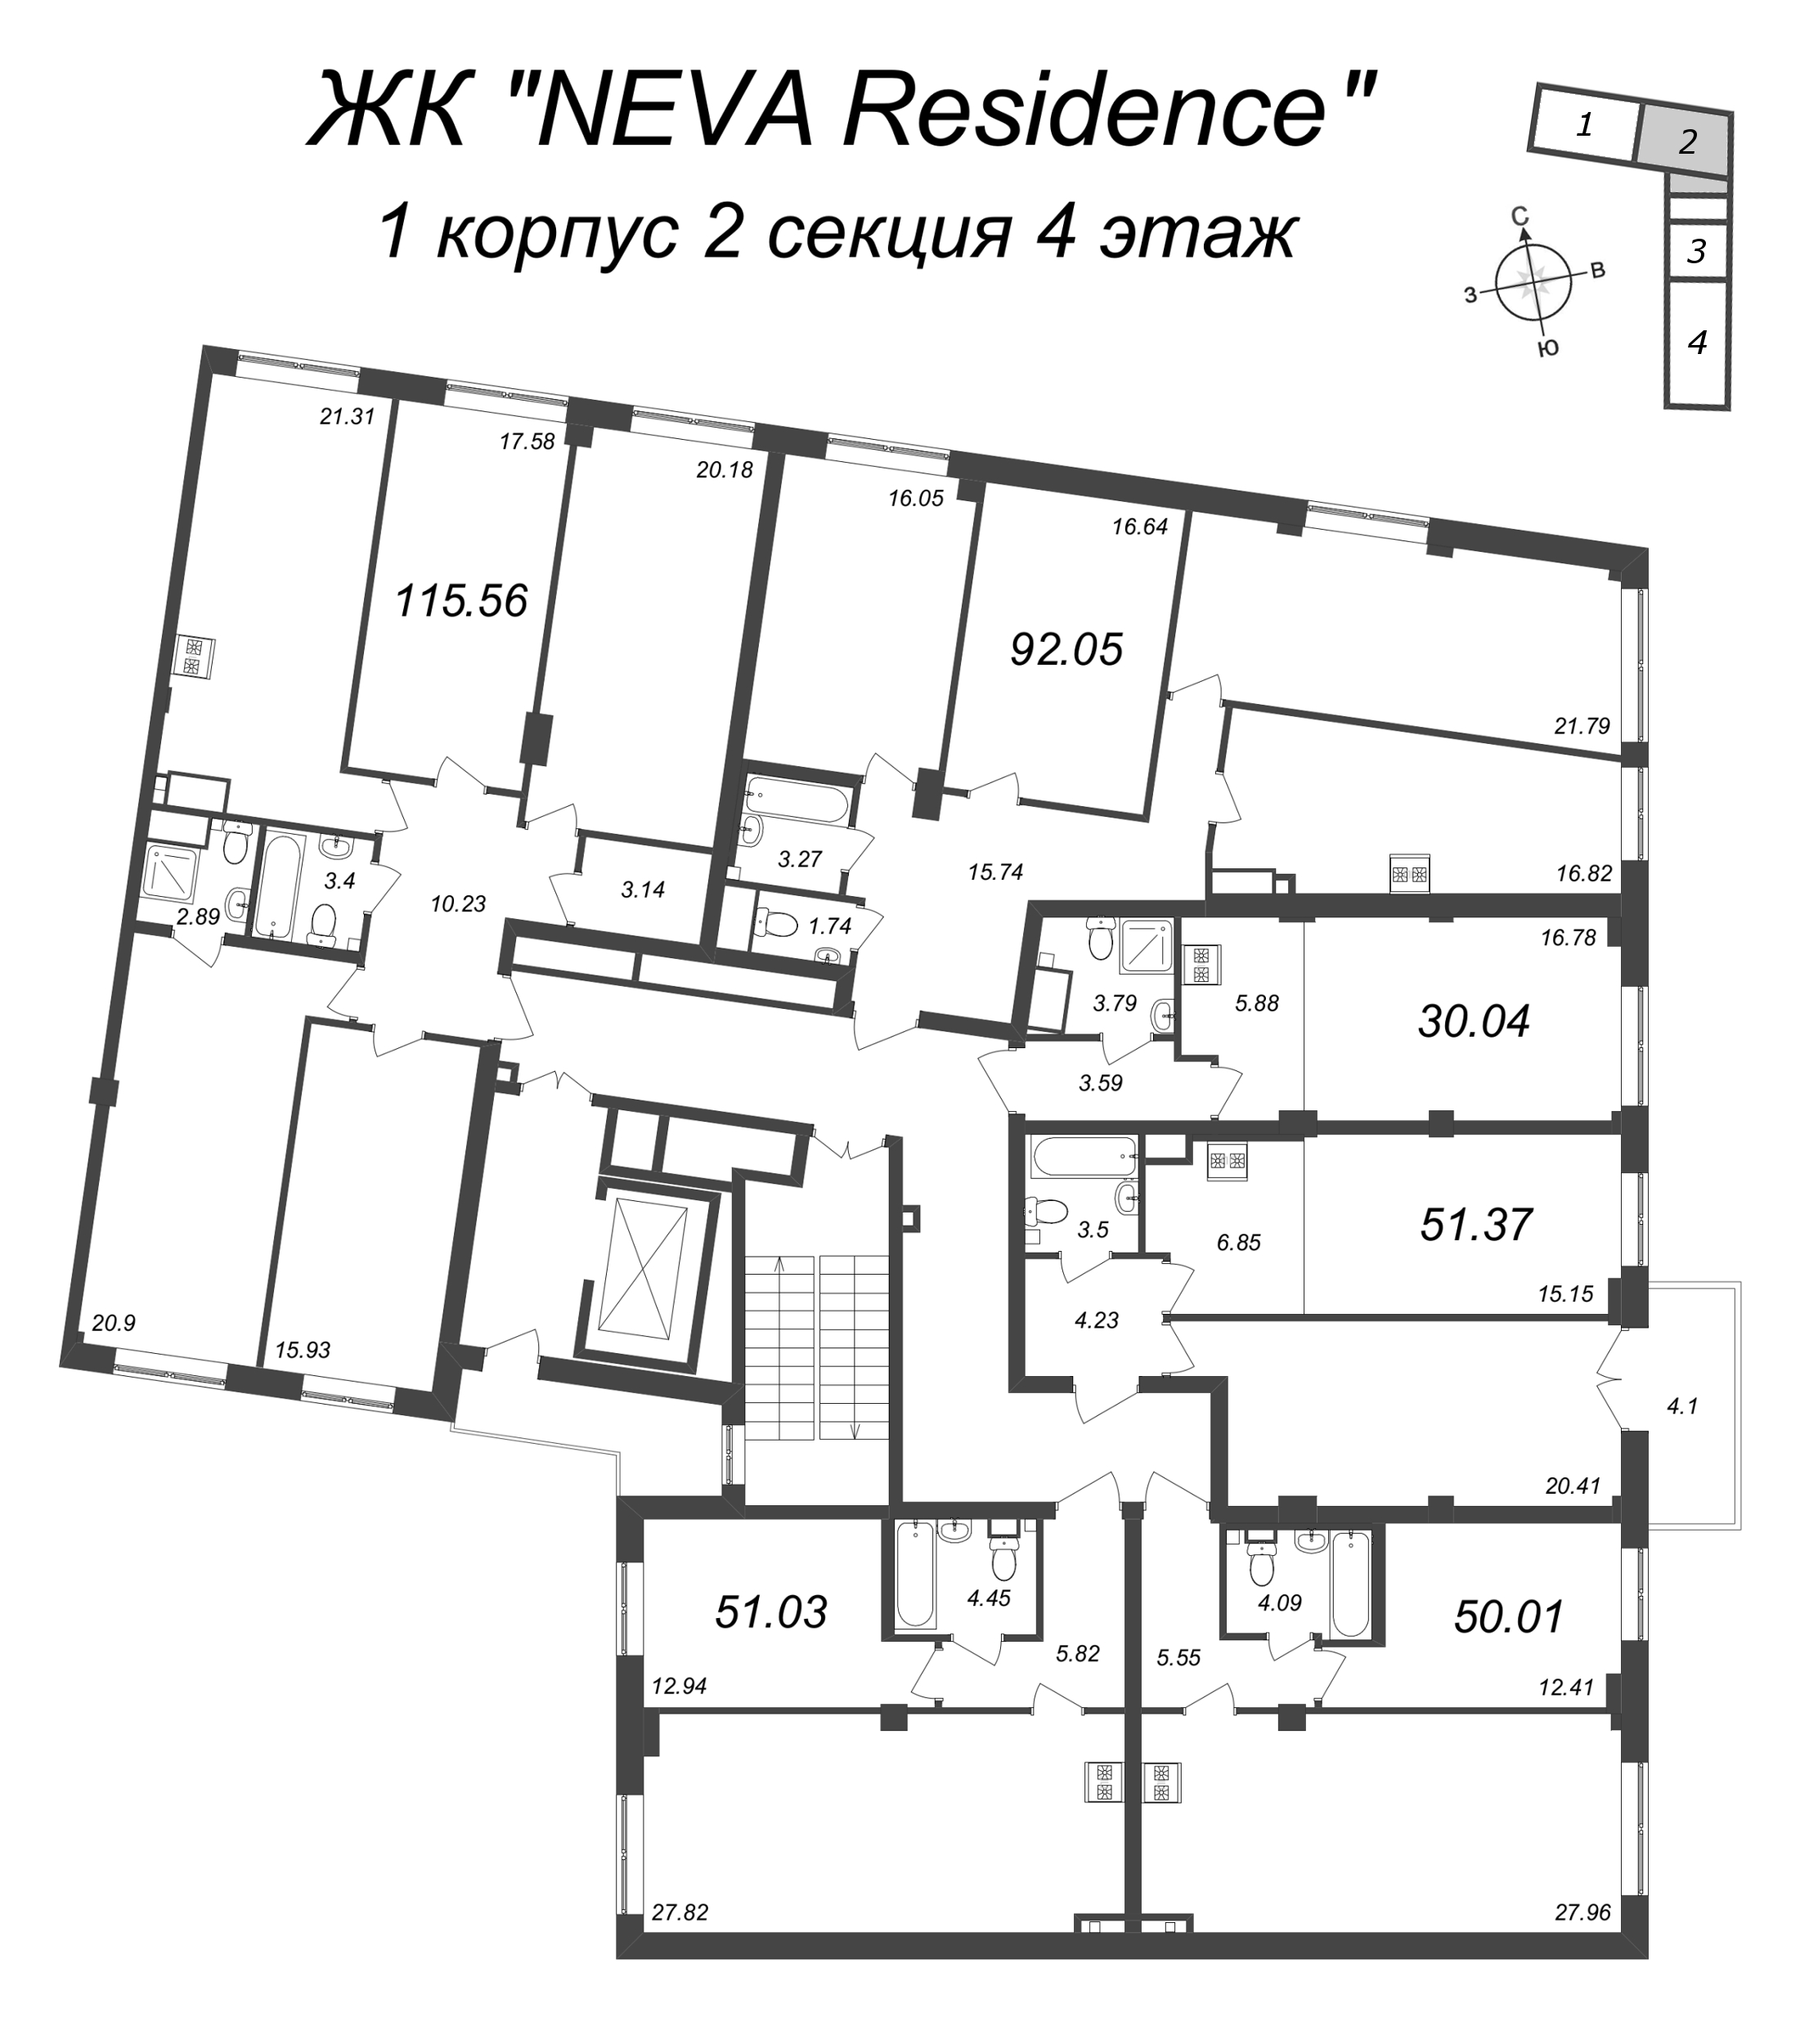 5-комнатная (Евро) квартира, 115.56 м² - планировка этажа